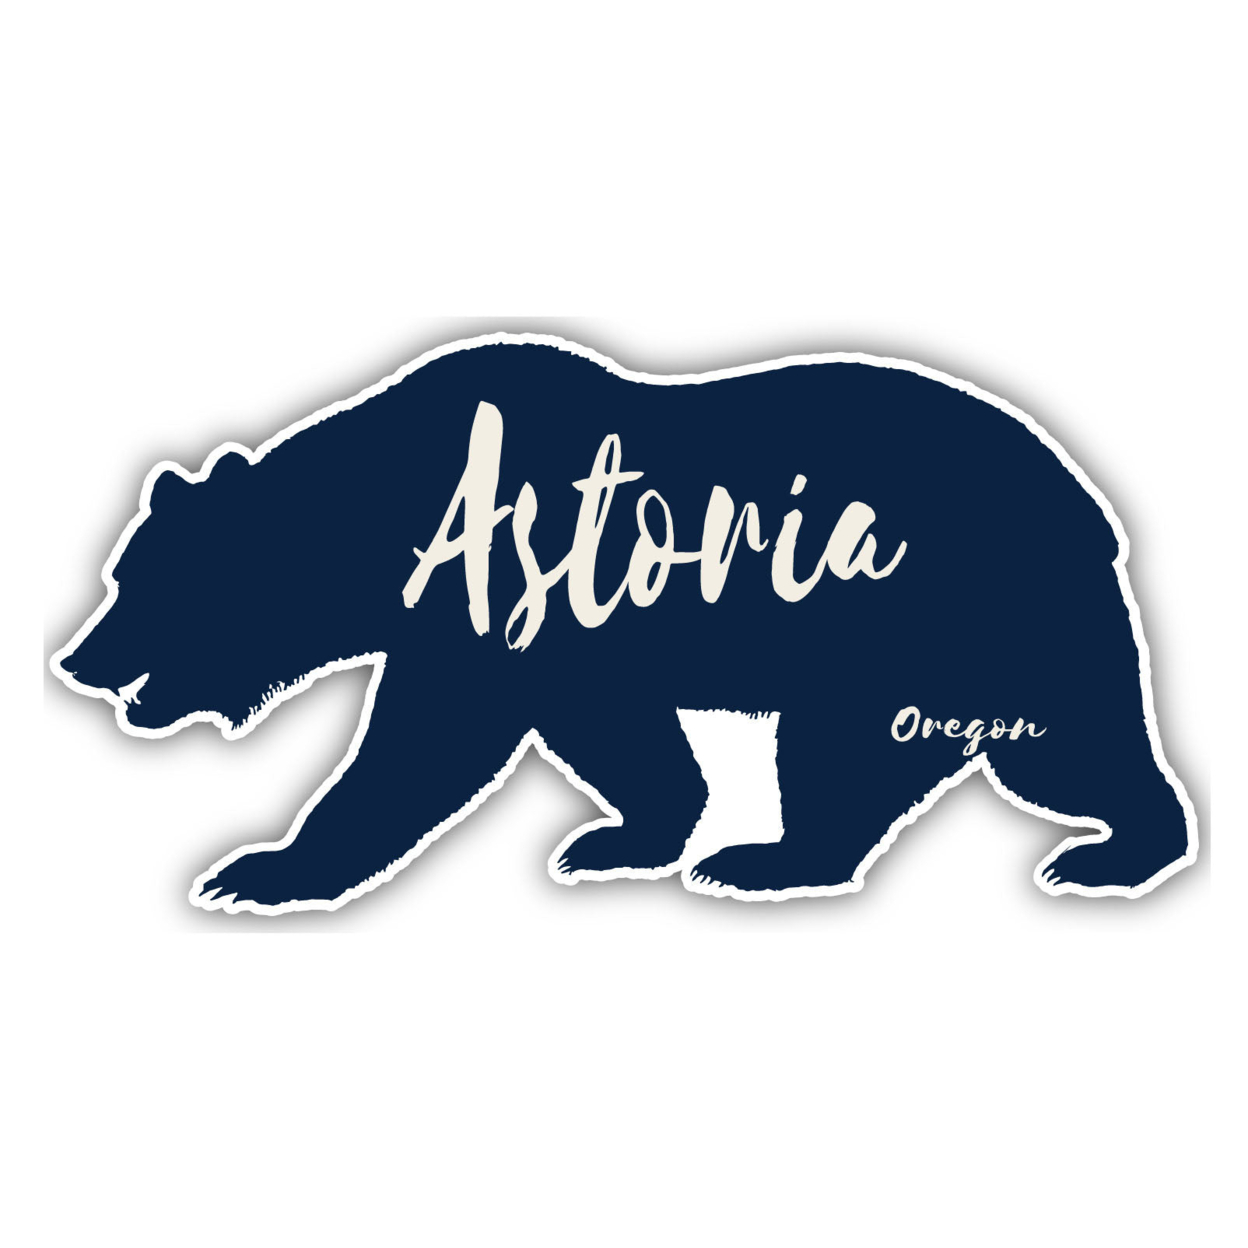 Astoria Oregon Souvenir Decorative Stickers (Choose Theme And Size) - Single Unit, 4-Inch, Tent